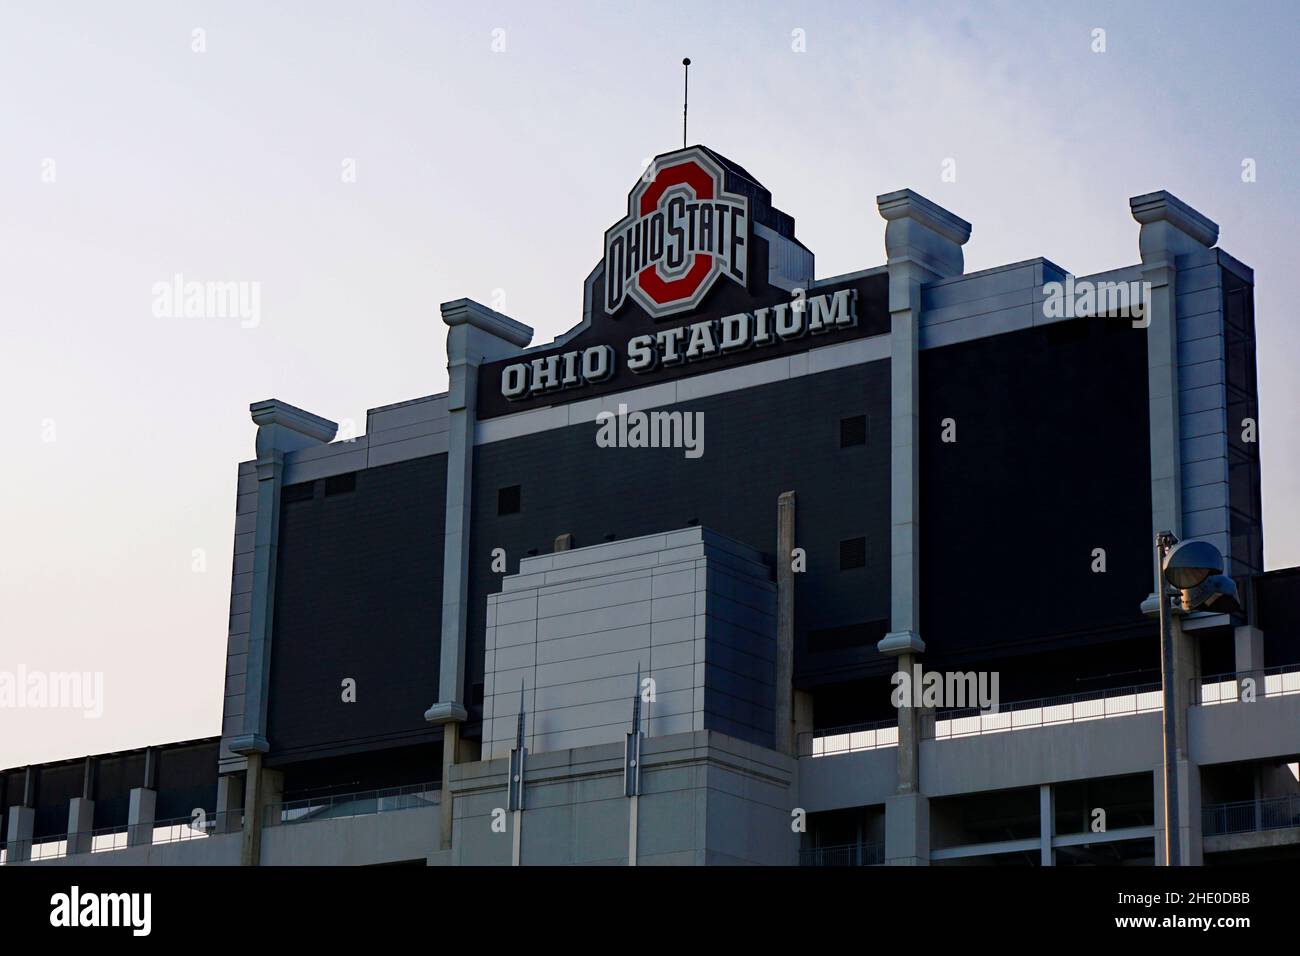 Ohio State University sign on Ohio Stadium. Stock Photo